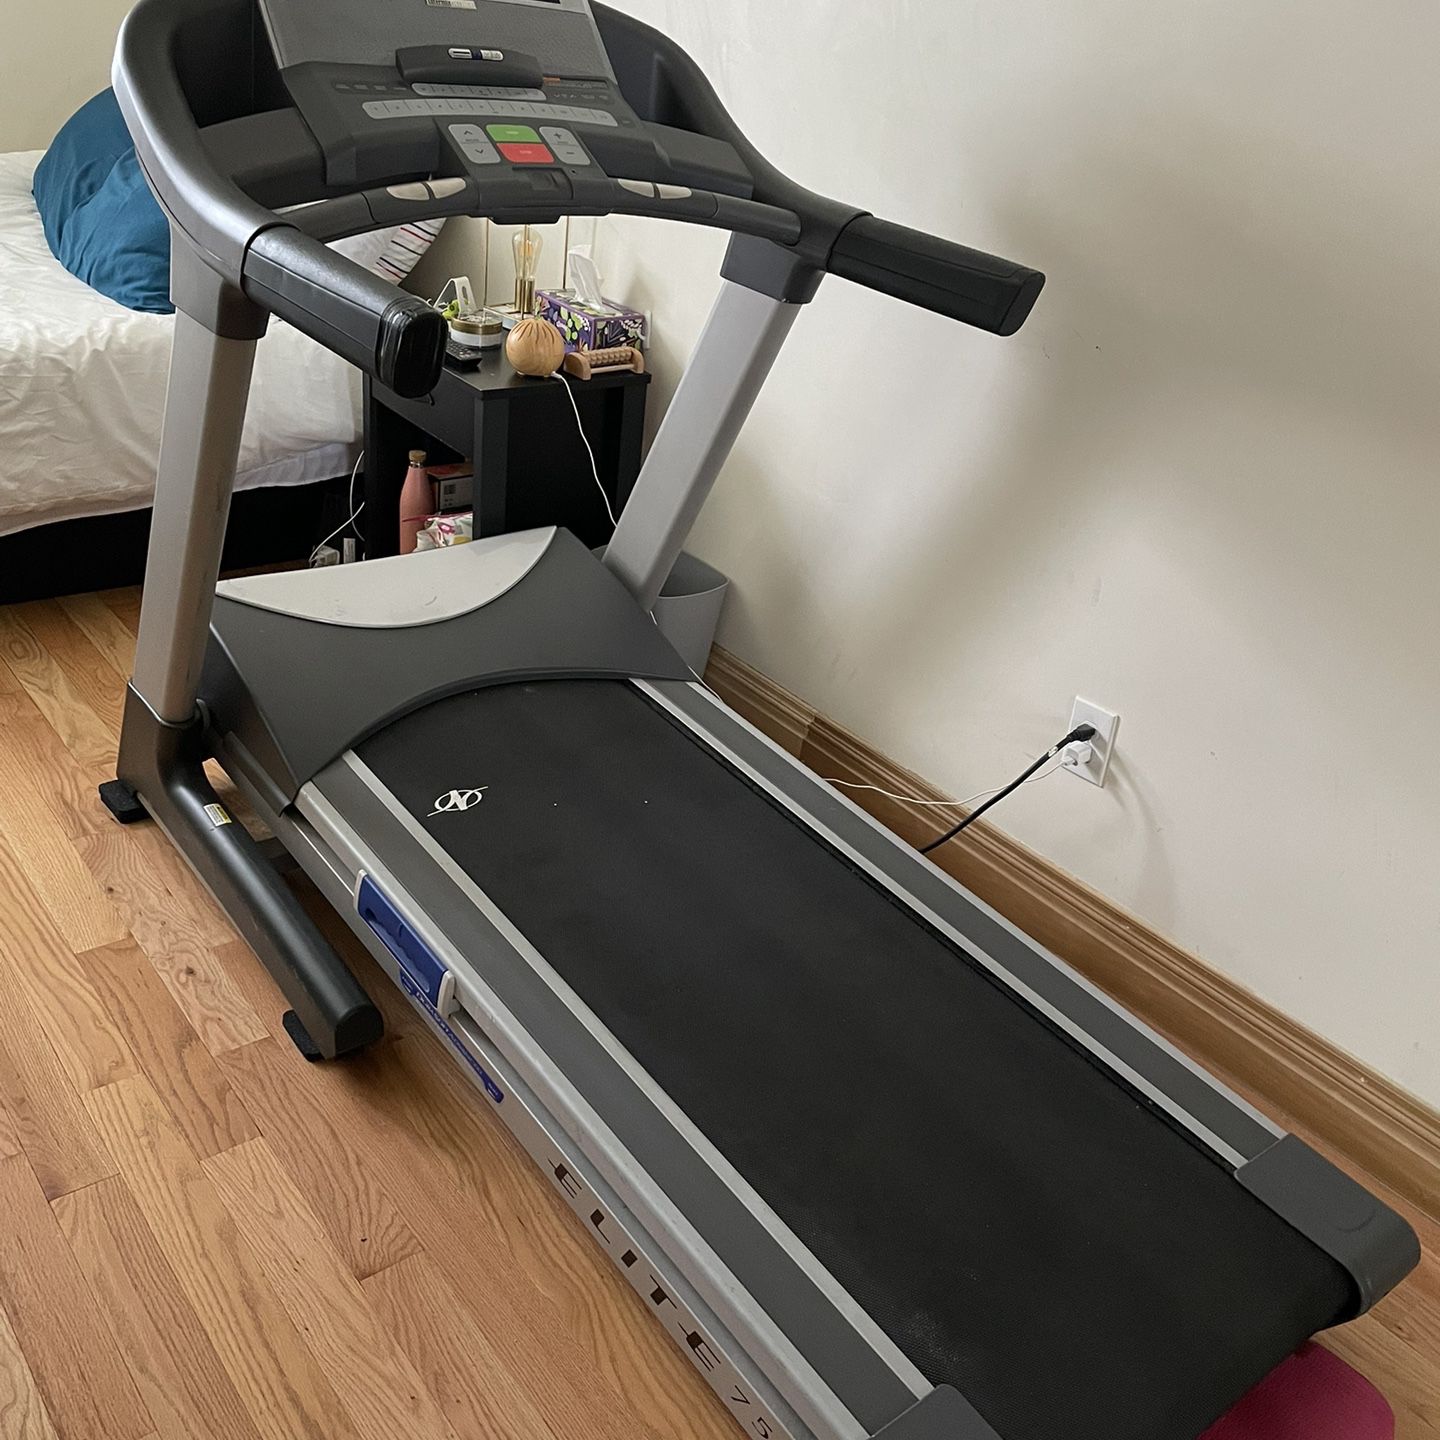 NordicTrack Treadmill Elite 7500